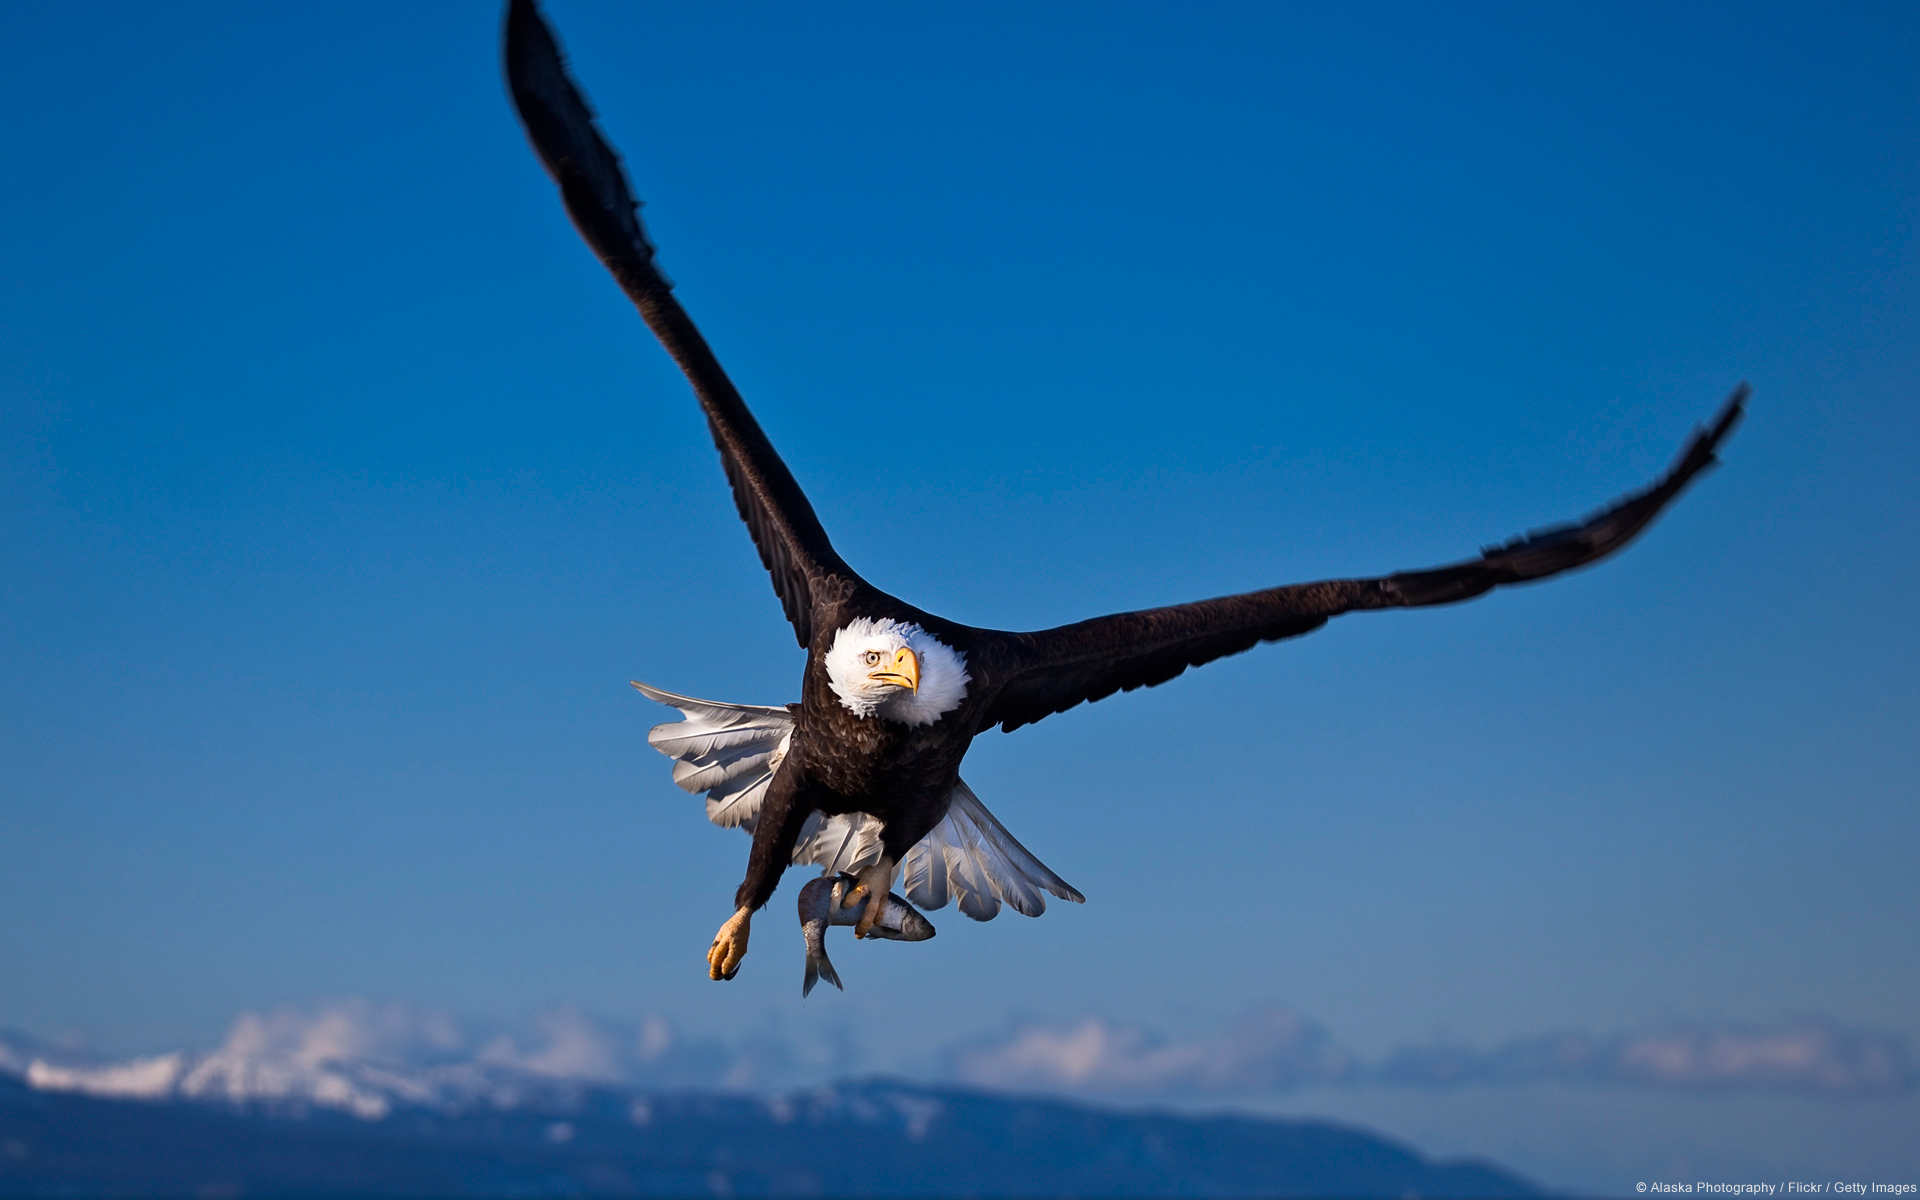 184590 descargar imagen animales, aves, águila calva, ave: fondos de pantalla y protectores de pantalla gratis